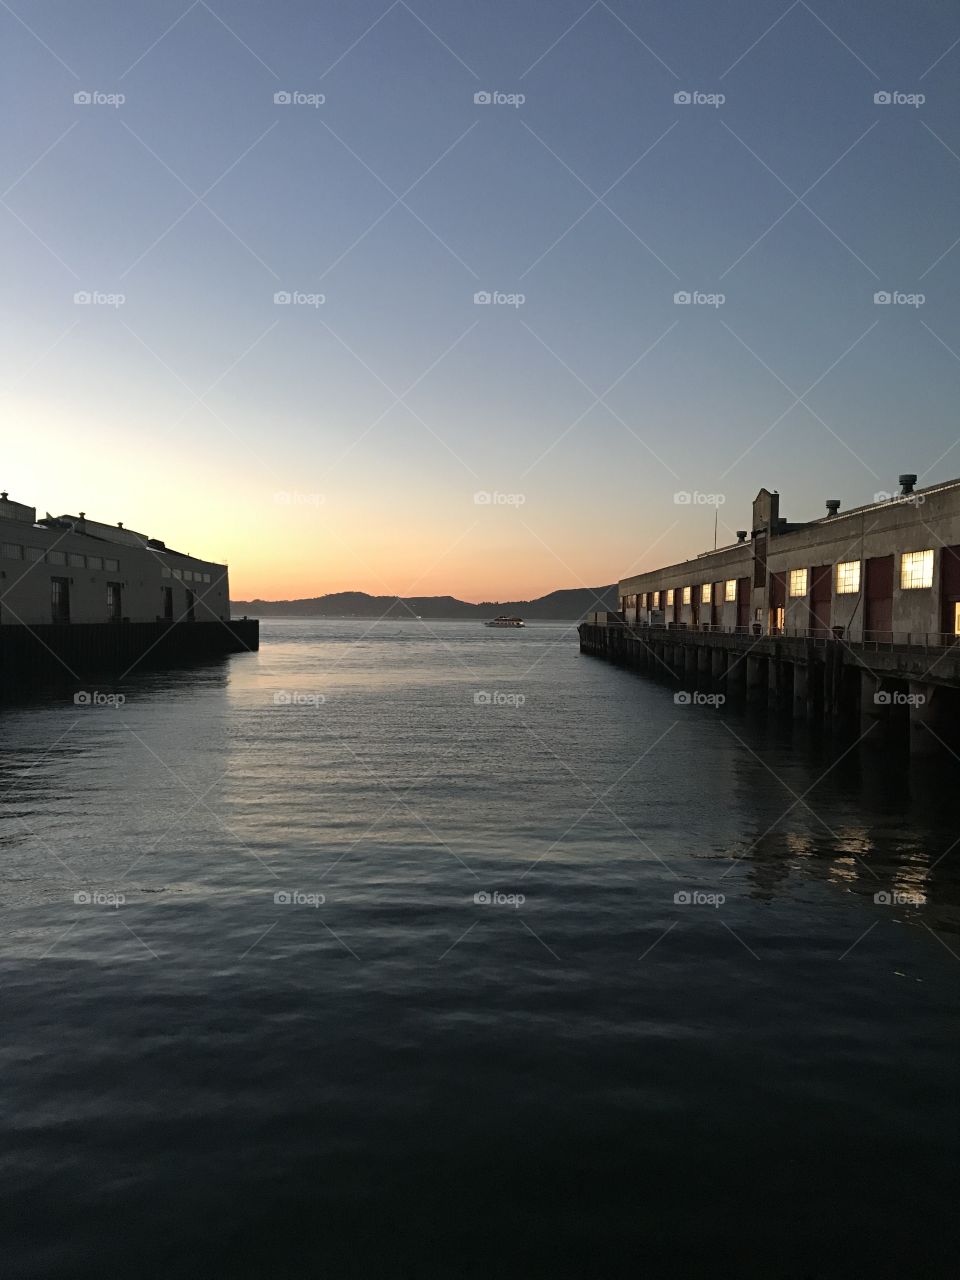 For mason center, San Francisco twilight sunset